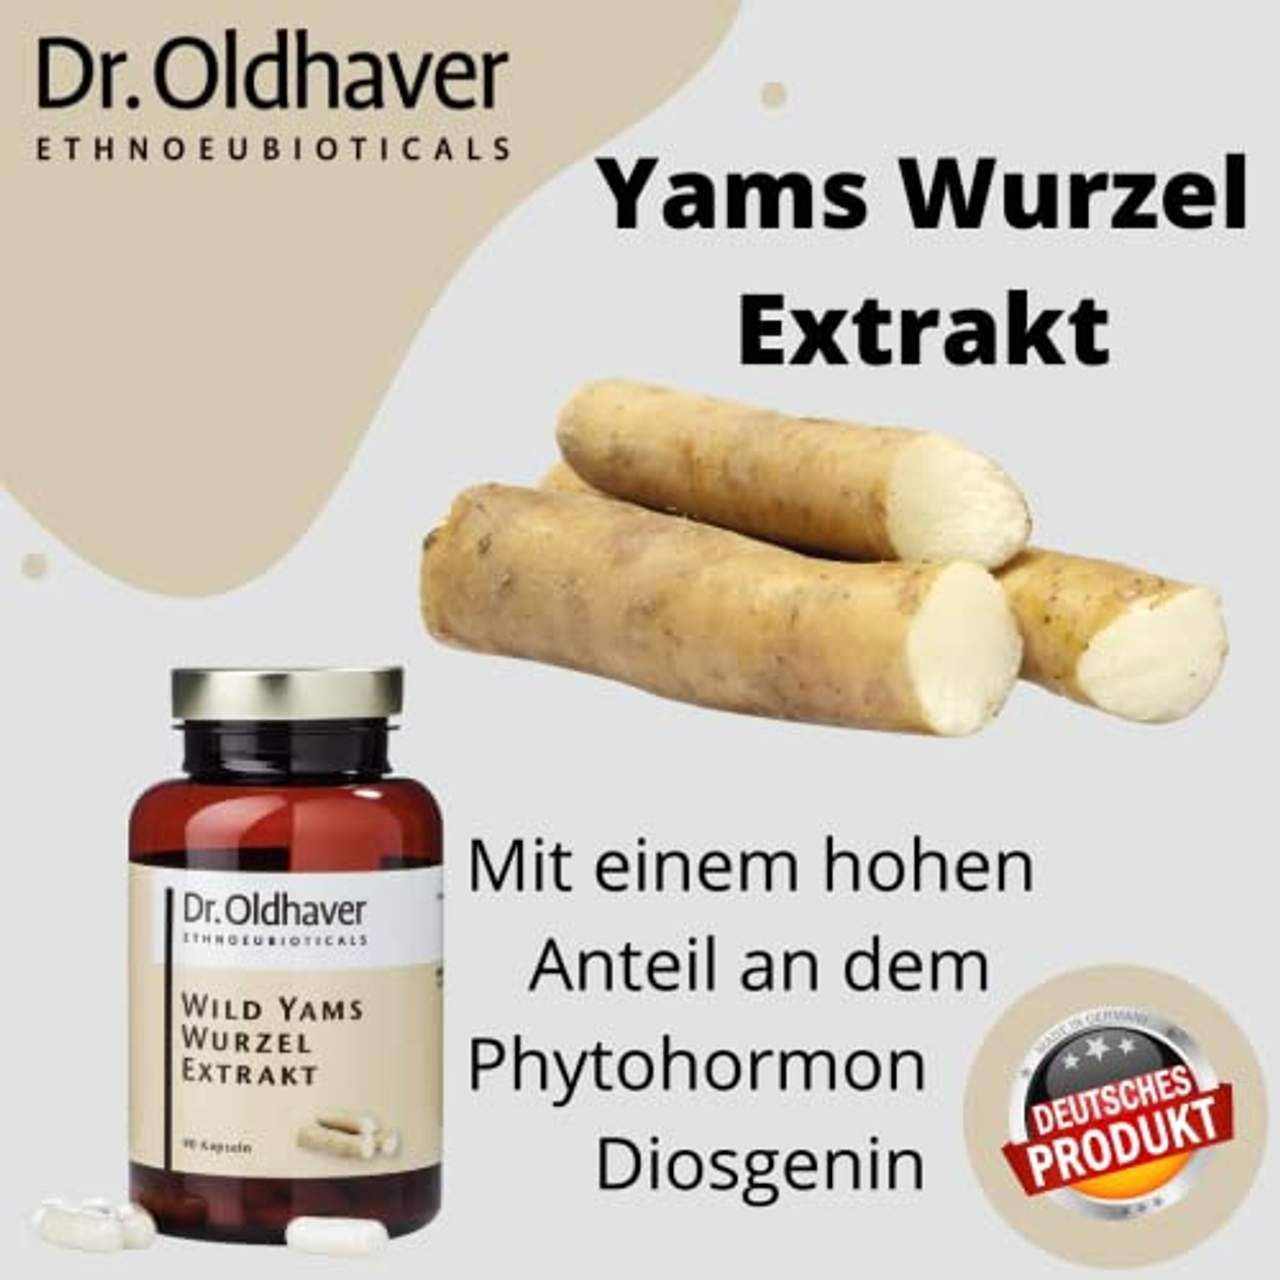 Dr Oldhaver Wild Yams Wurzel Extrakt